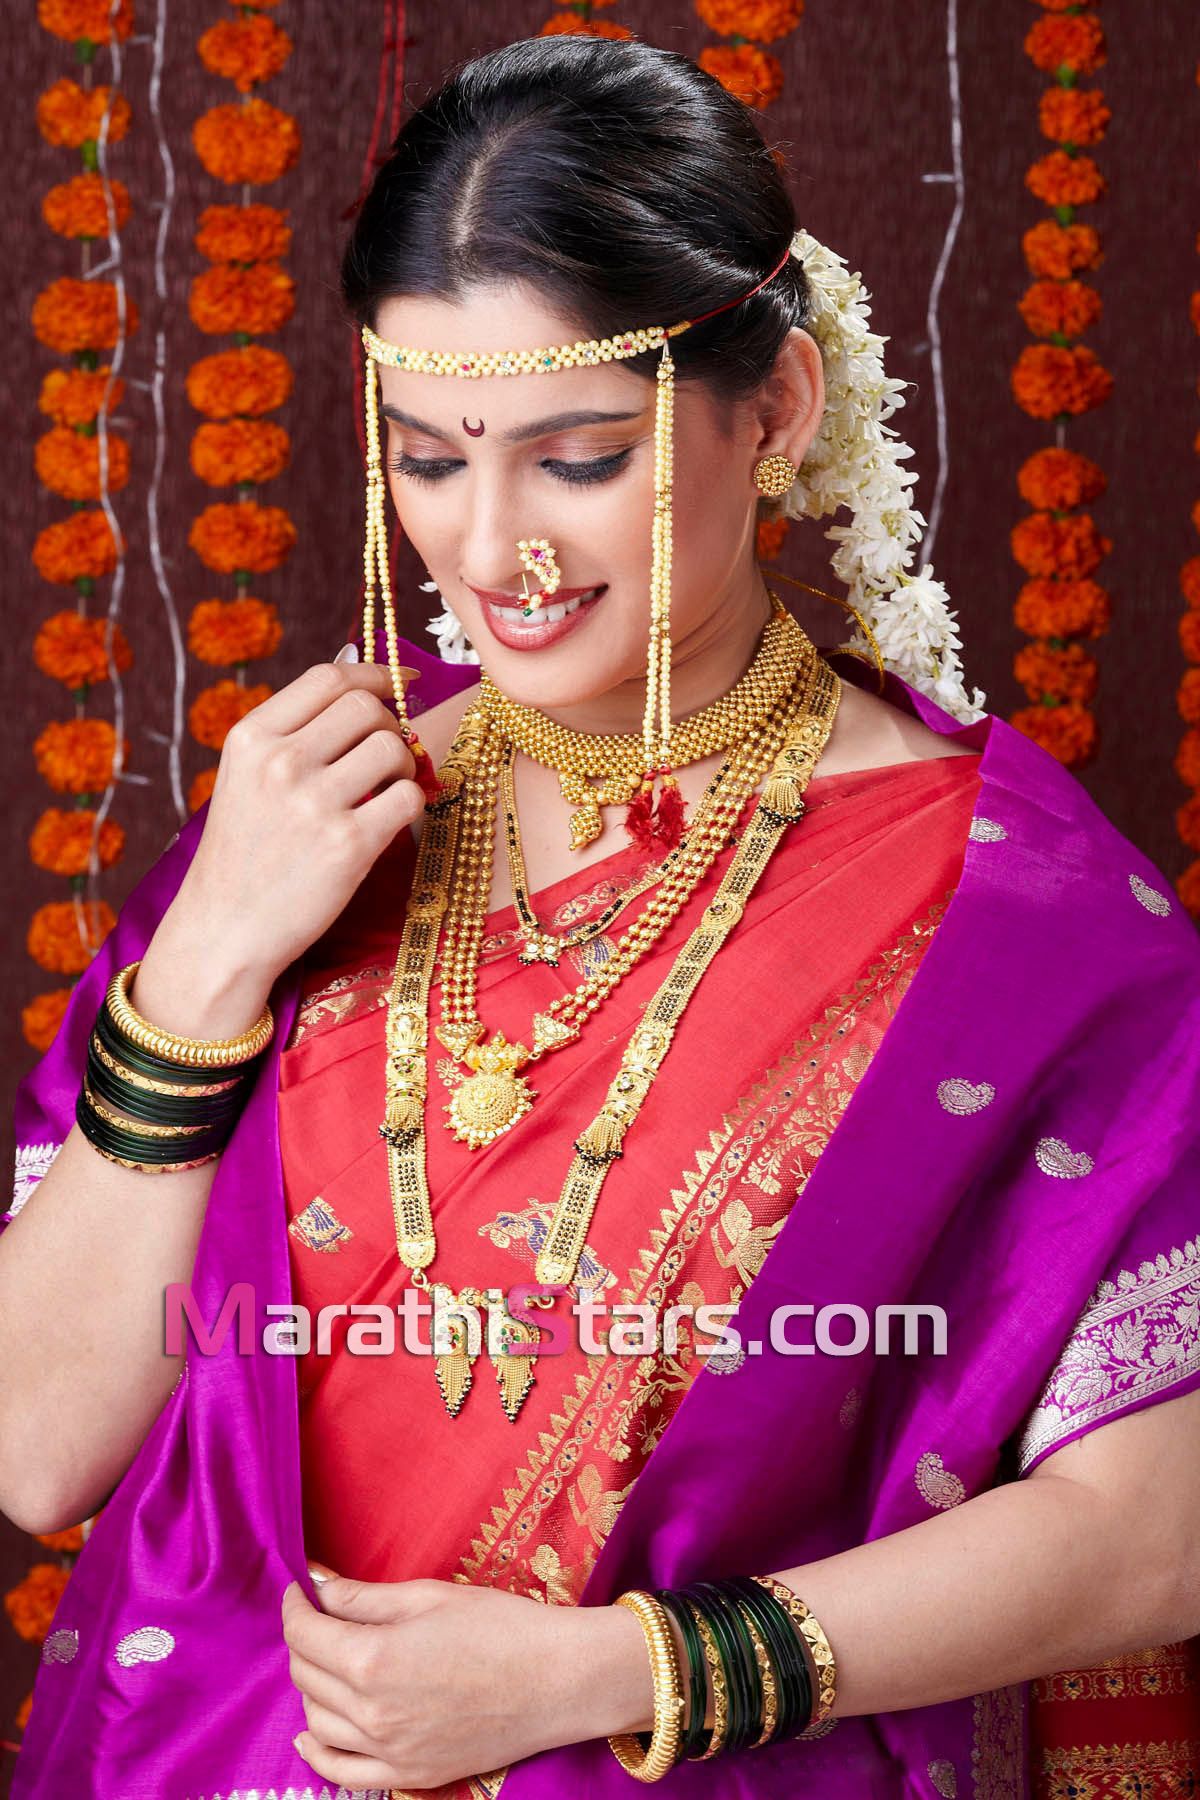 Priya Bapat Marathi Actress Photo Biography Wallpaper Hot Image